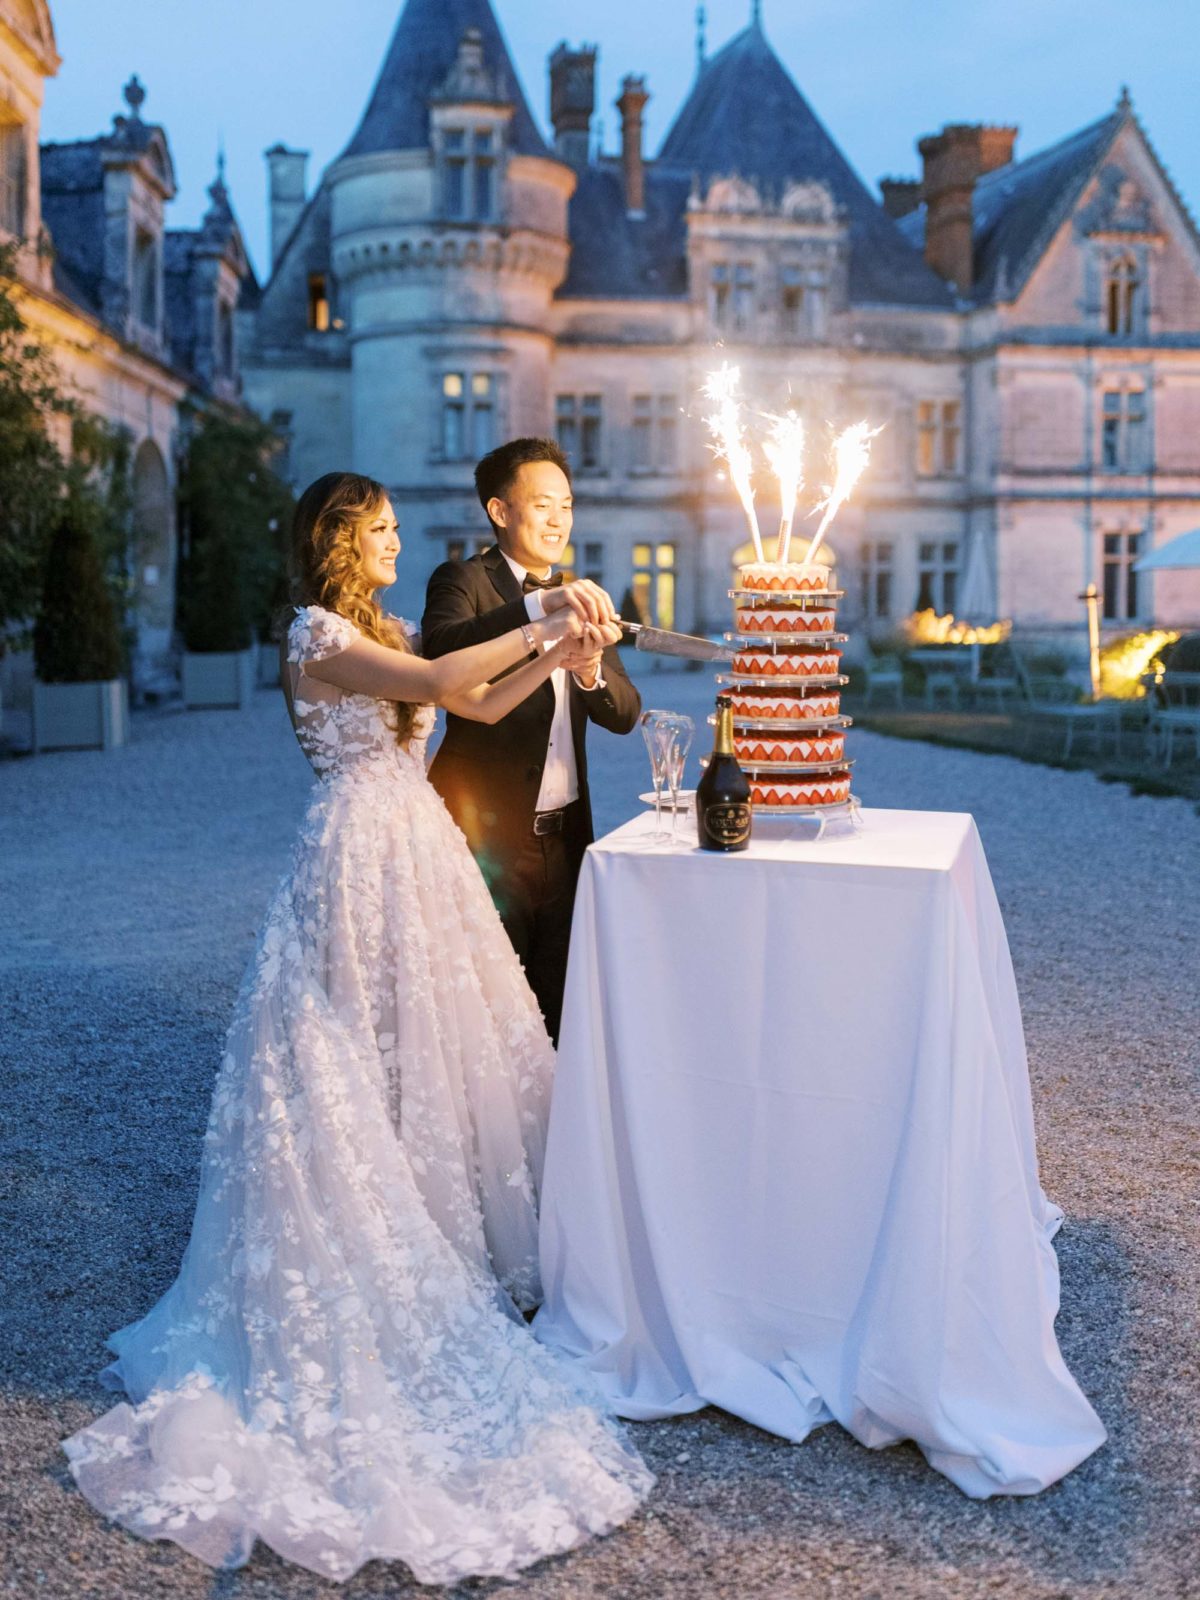 Chateau Bourdaisiere Wedding Photographer | Loire Valley France Luxury Wedding | Paris Film Photographer | Molly Carr Photography